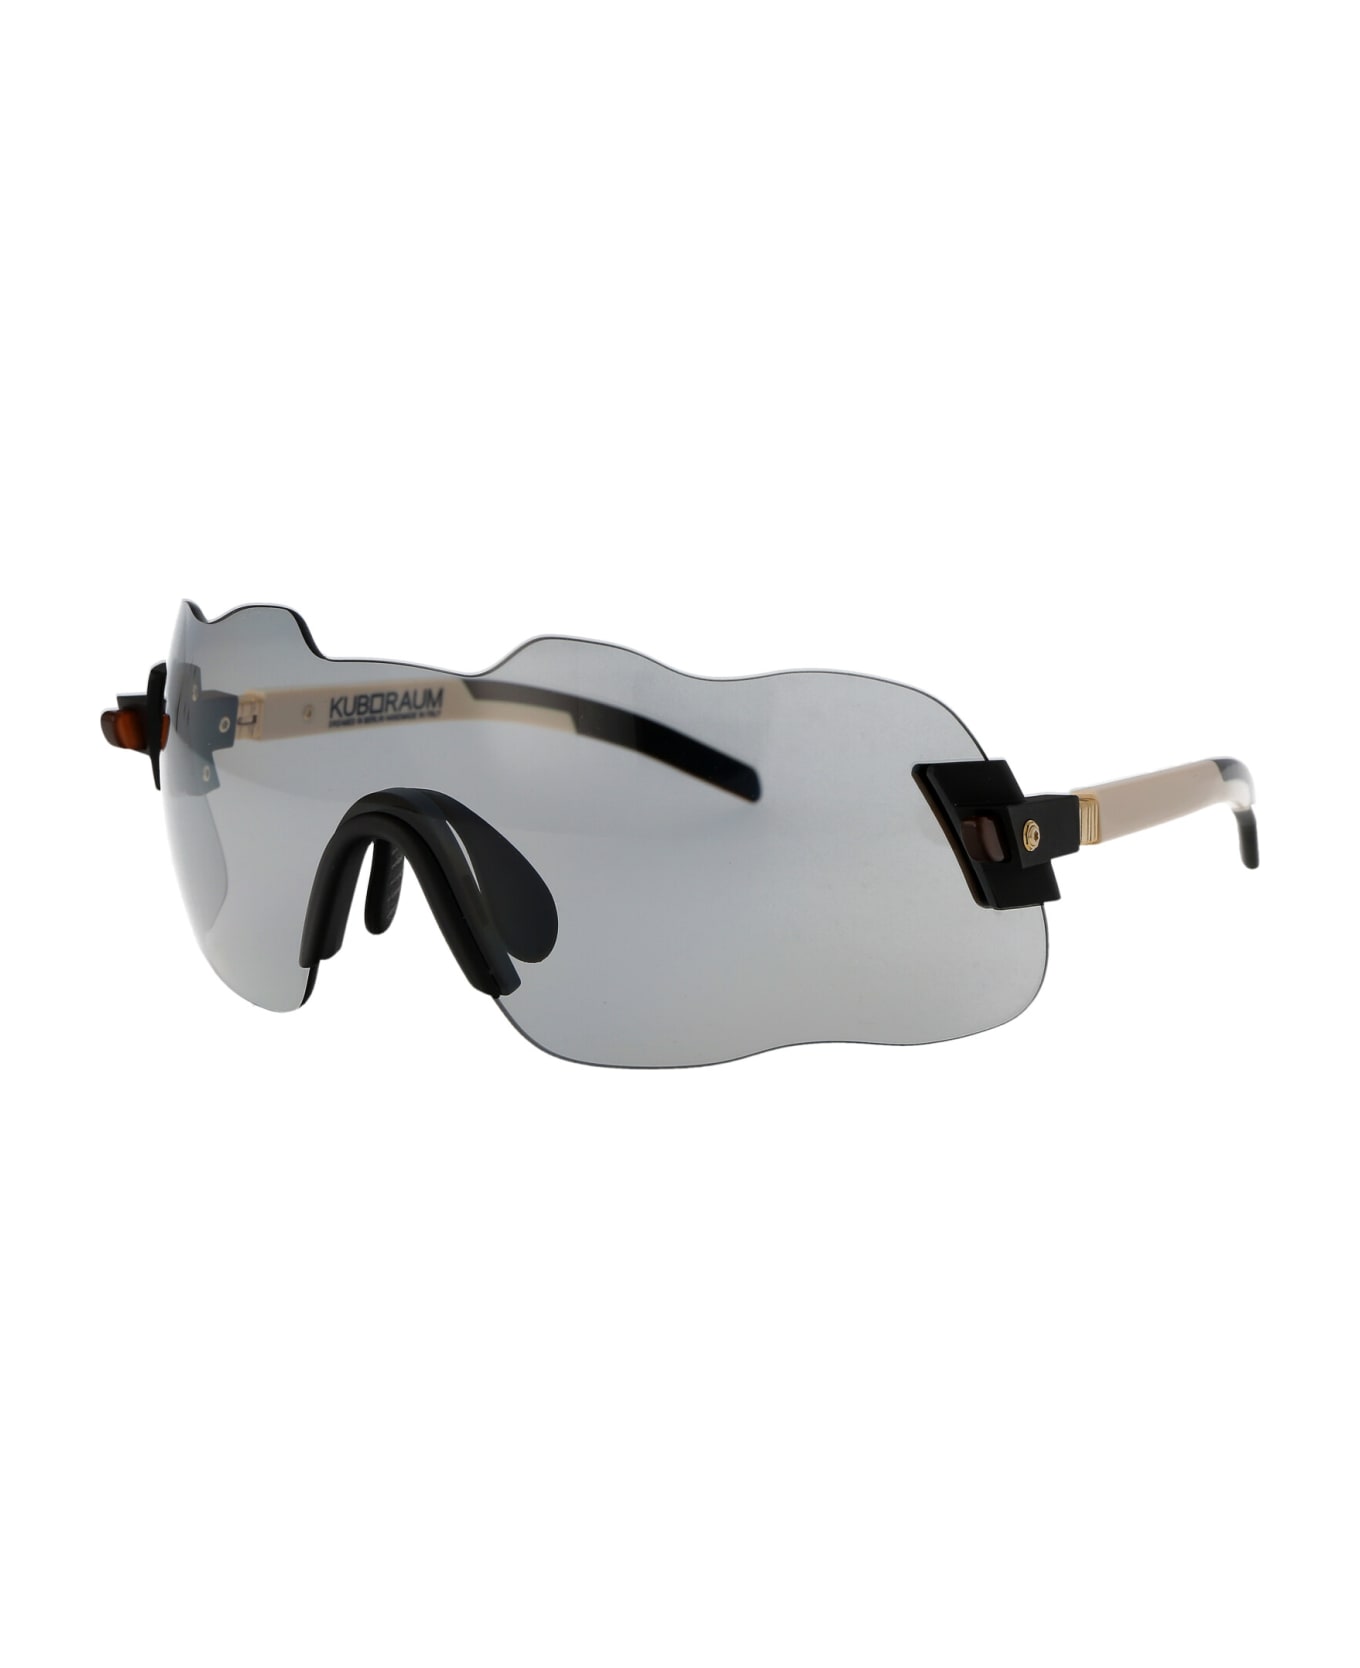 Kuboraum Maske E50 Sunglasses - BW GREY